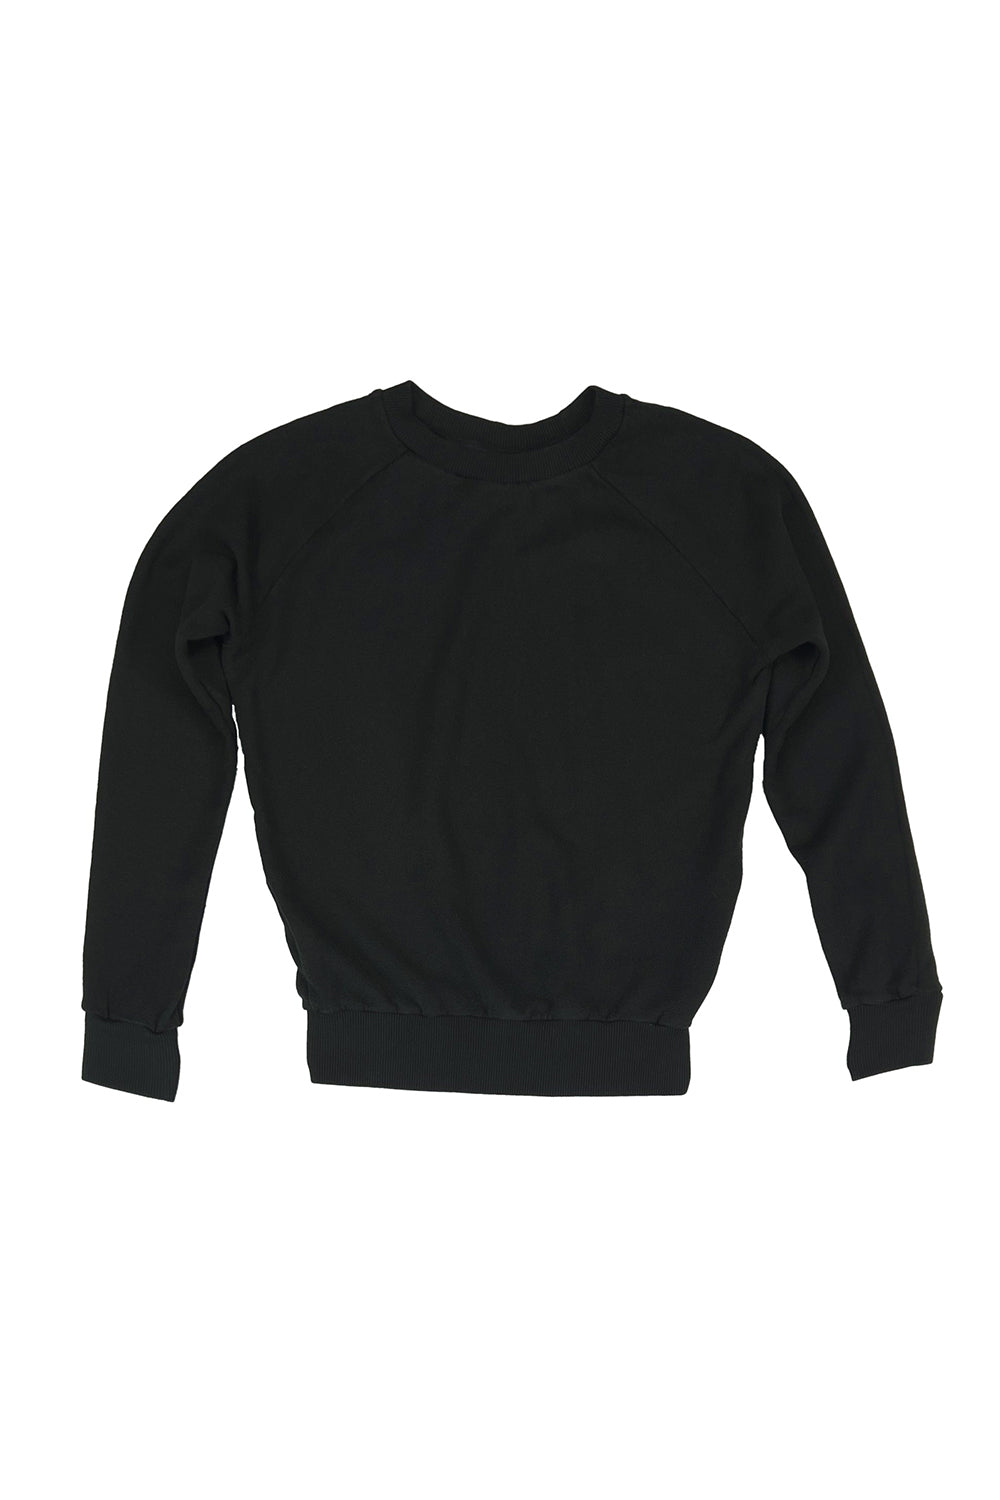 Alpine Raglan Sweatshirt | Jungmaven Hemp Clothing Black / S